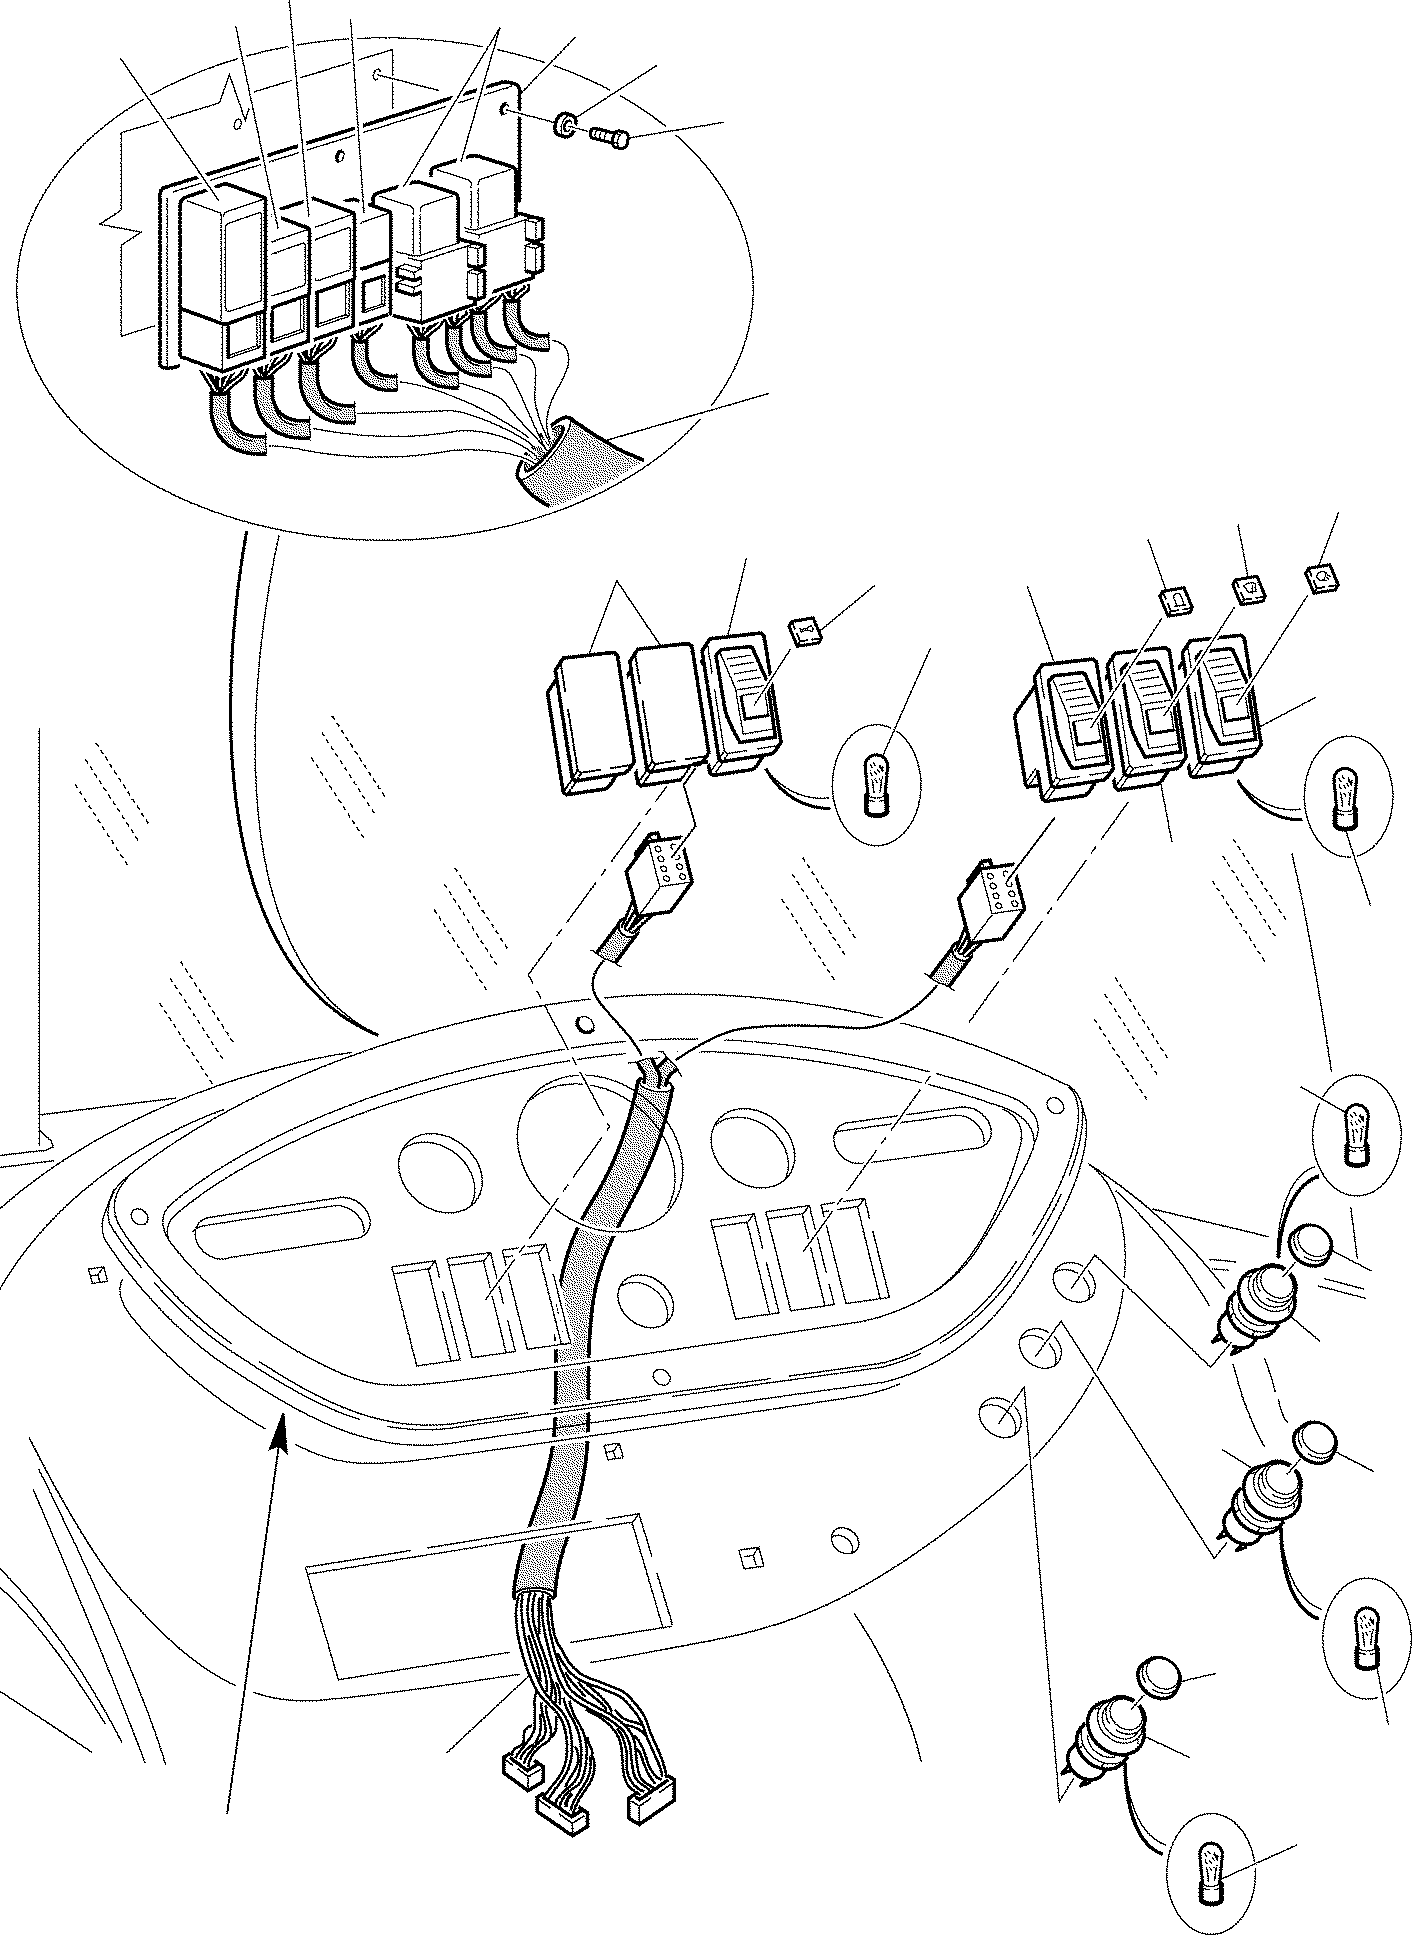 17. LATERAL DASHBOARD (2/2) [1440] - Komatsu part WB97S-2 S/N 97SF11205-Up [wb97s_2c]